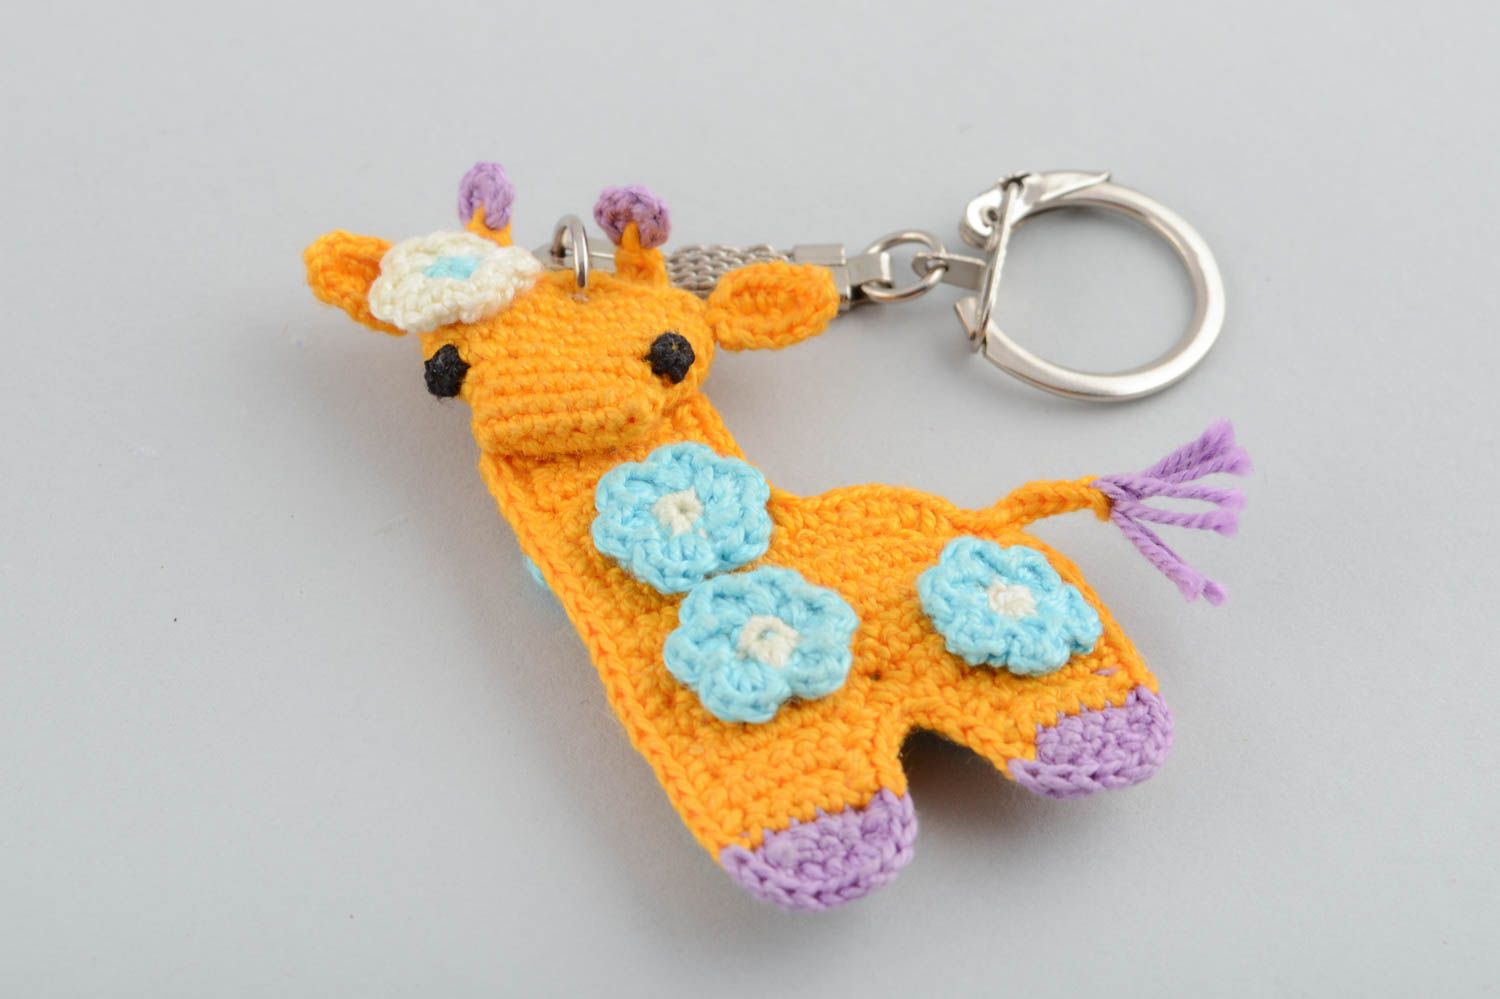 Keychain with soft giraffe toy cute little yellow crocheted handmade accessory photo 3